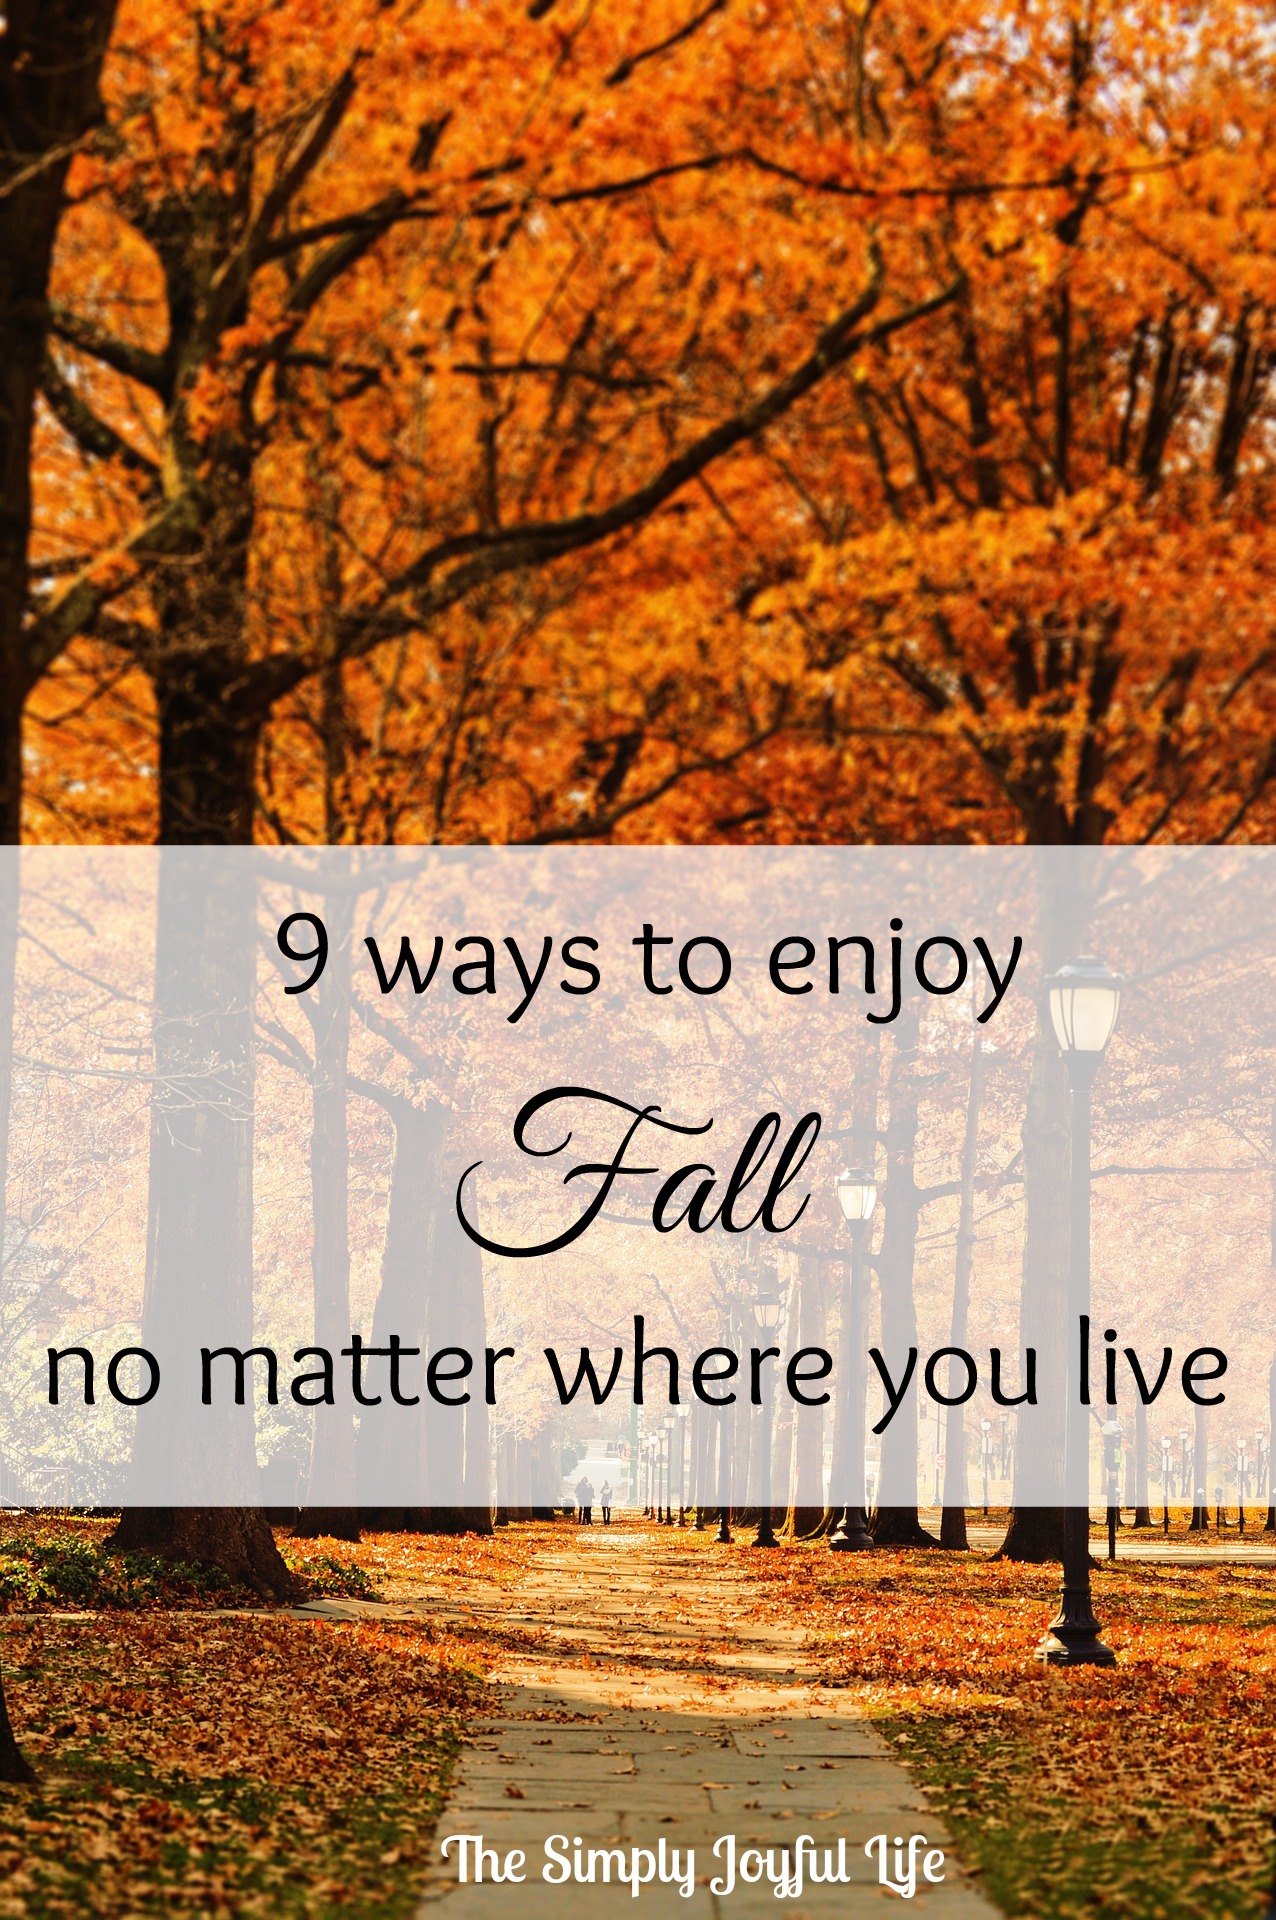 9 Ways to Enjoy Fall - No Matter Where You Live - The Simply Joyful Life